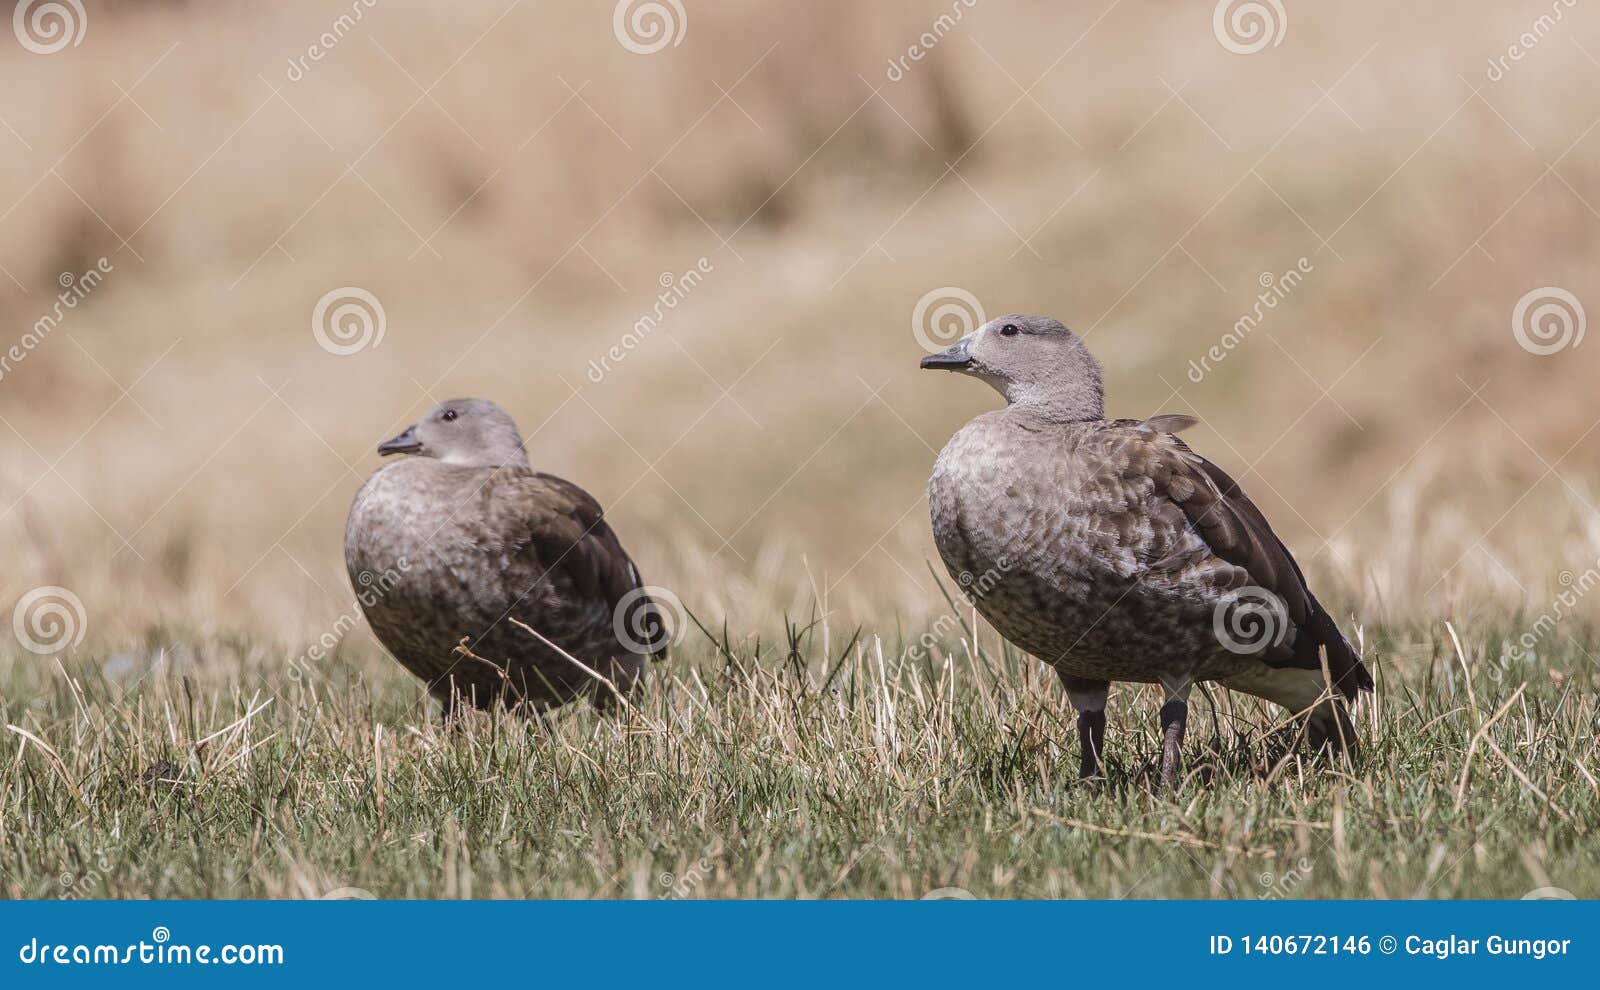 blue-winged geese in meadow